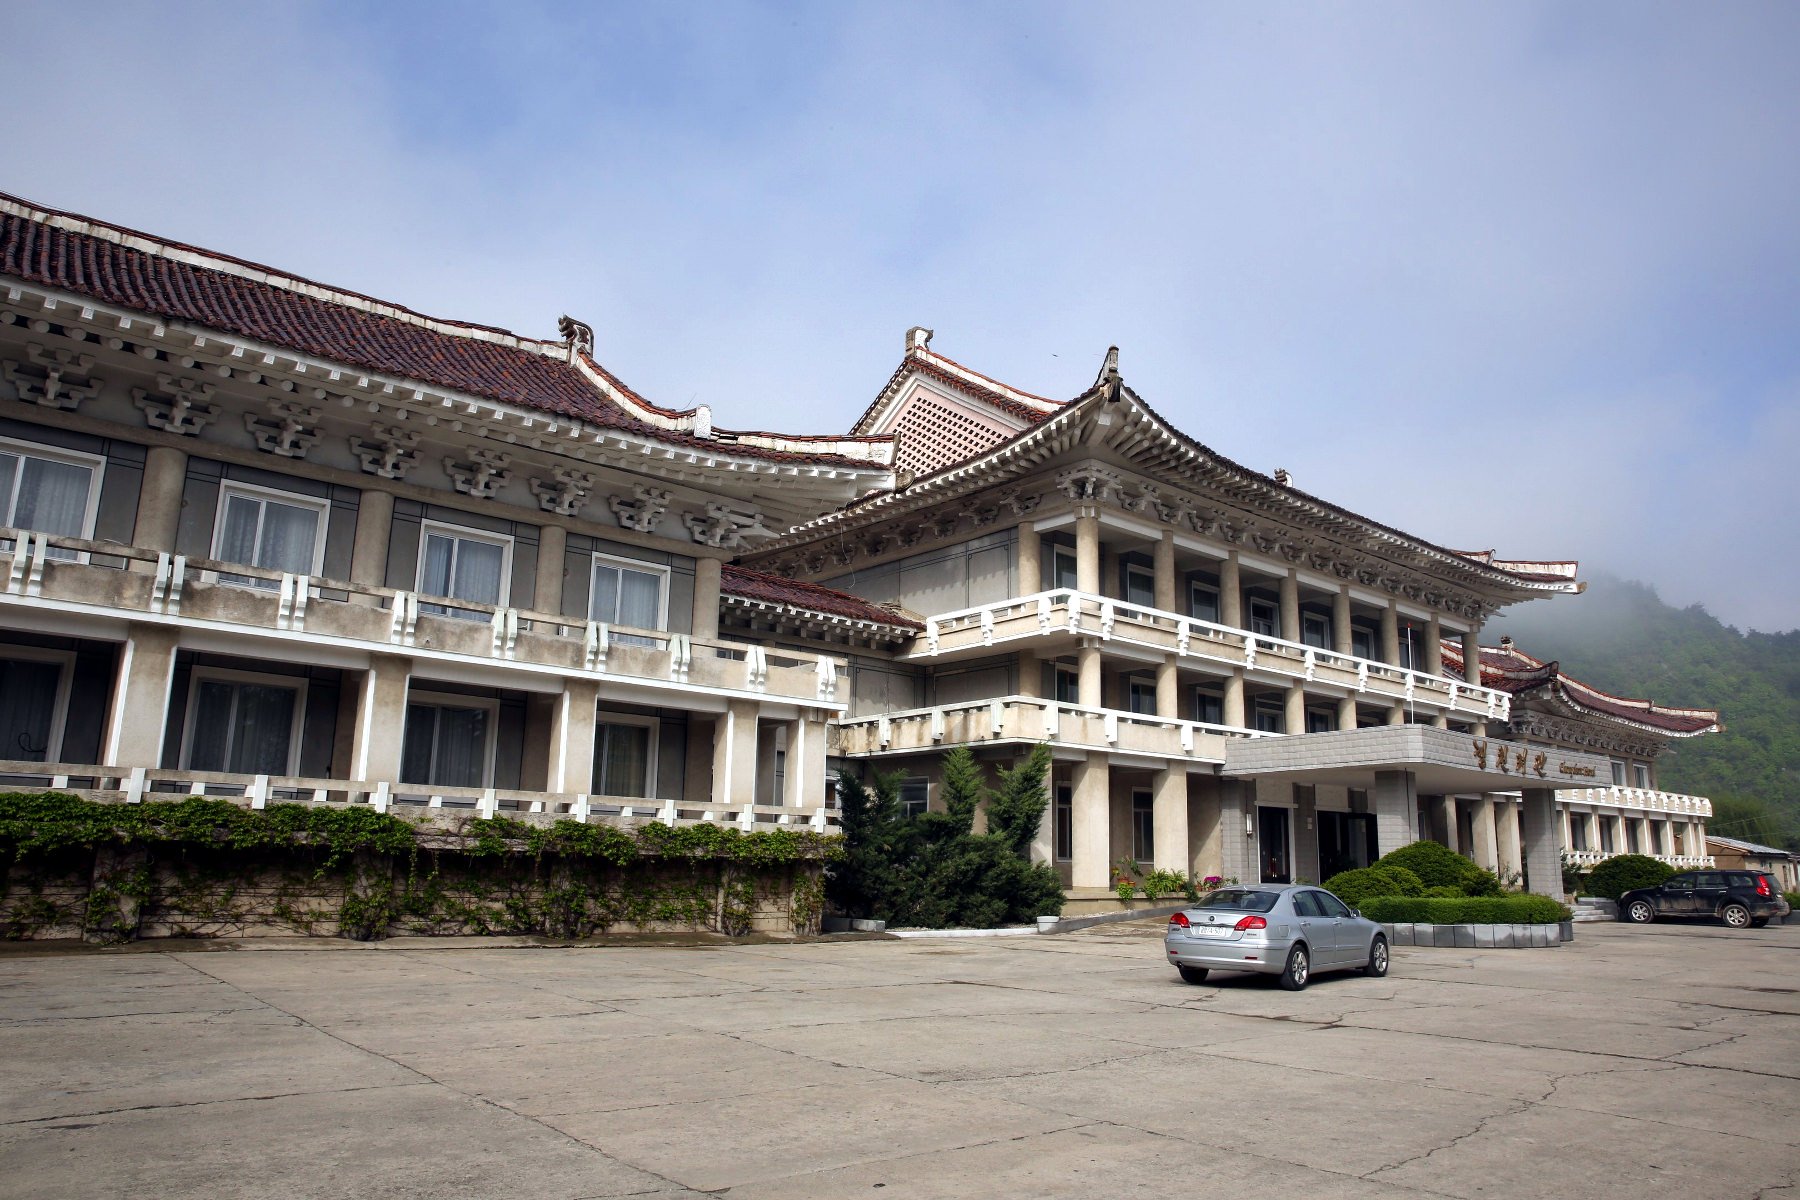 The Chongchon Hotel in Hyangsan Town, Mount Myohyang, North Korea (DPRK). Tour arranged by KTG Tours